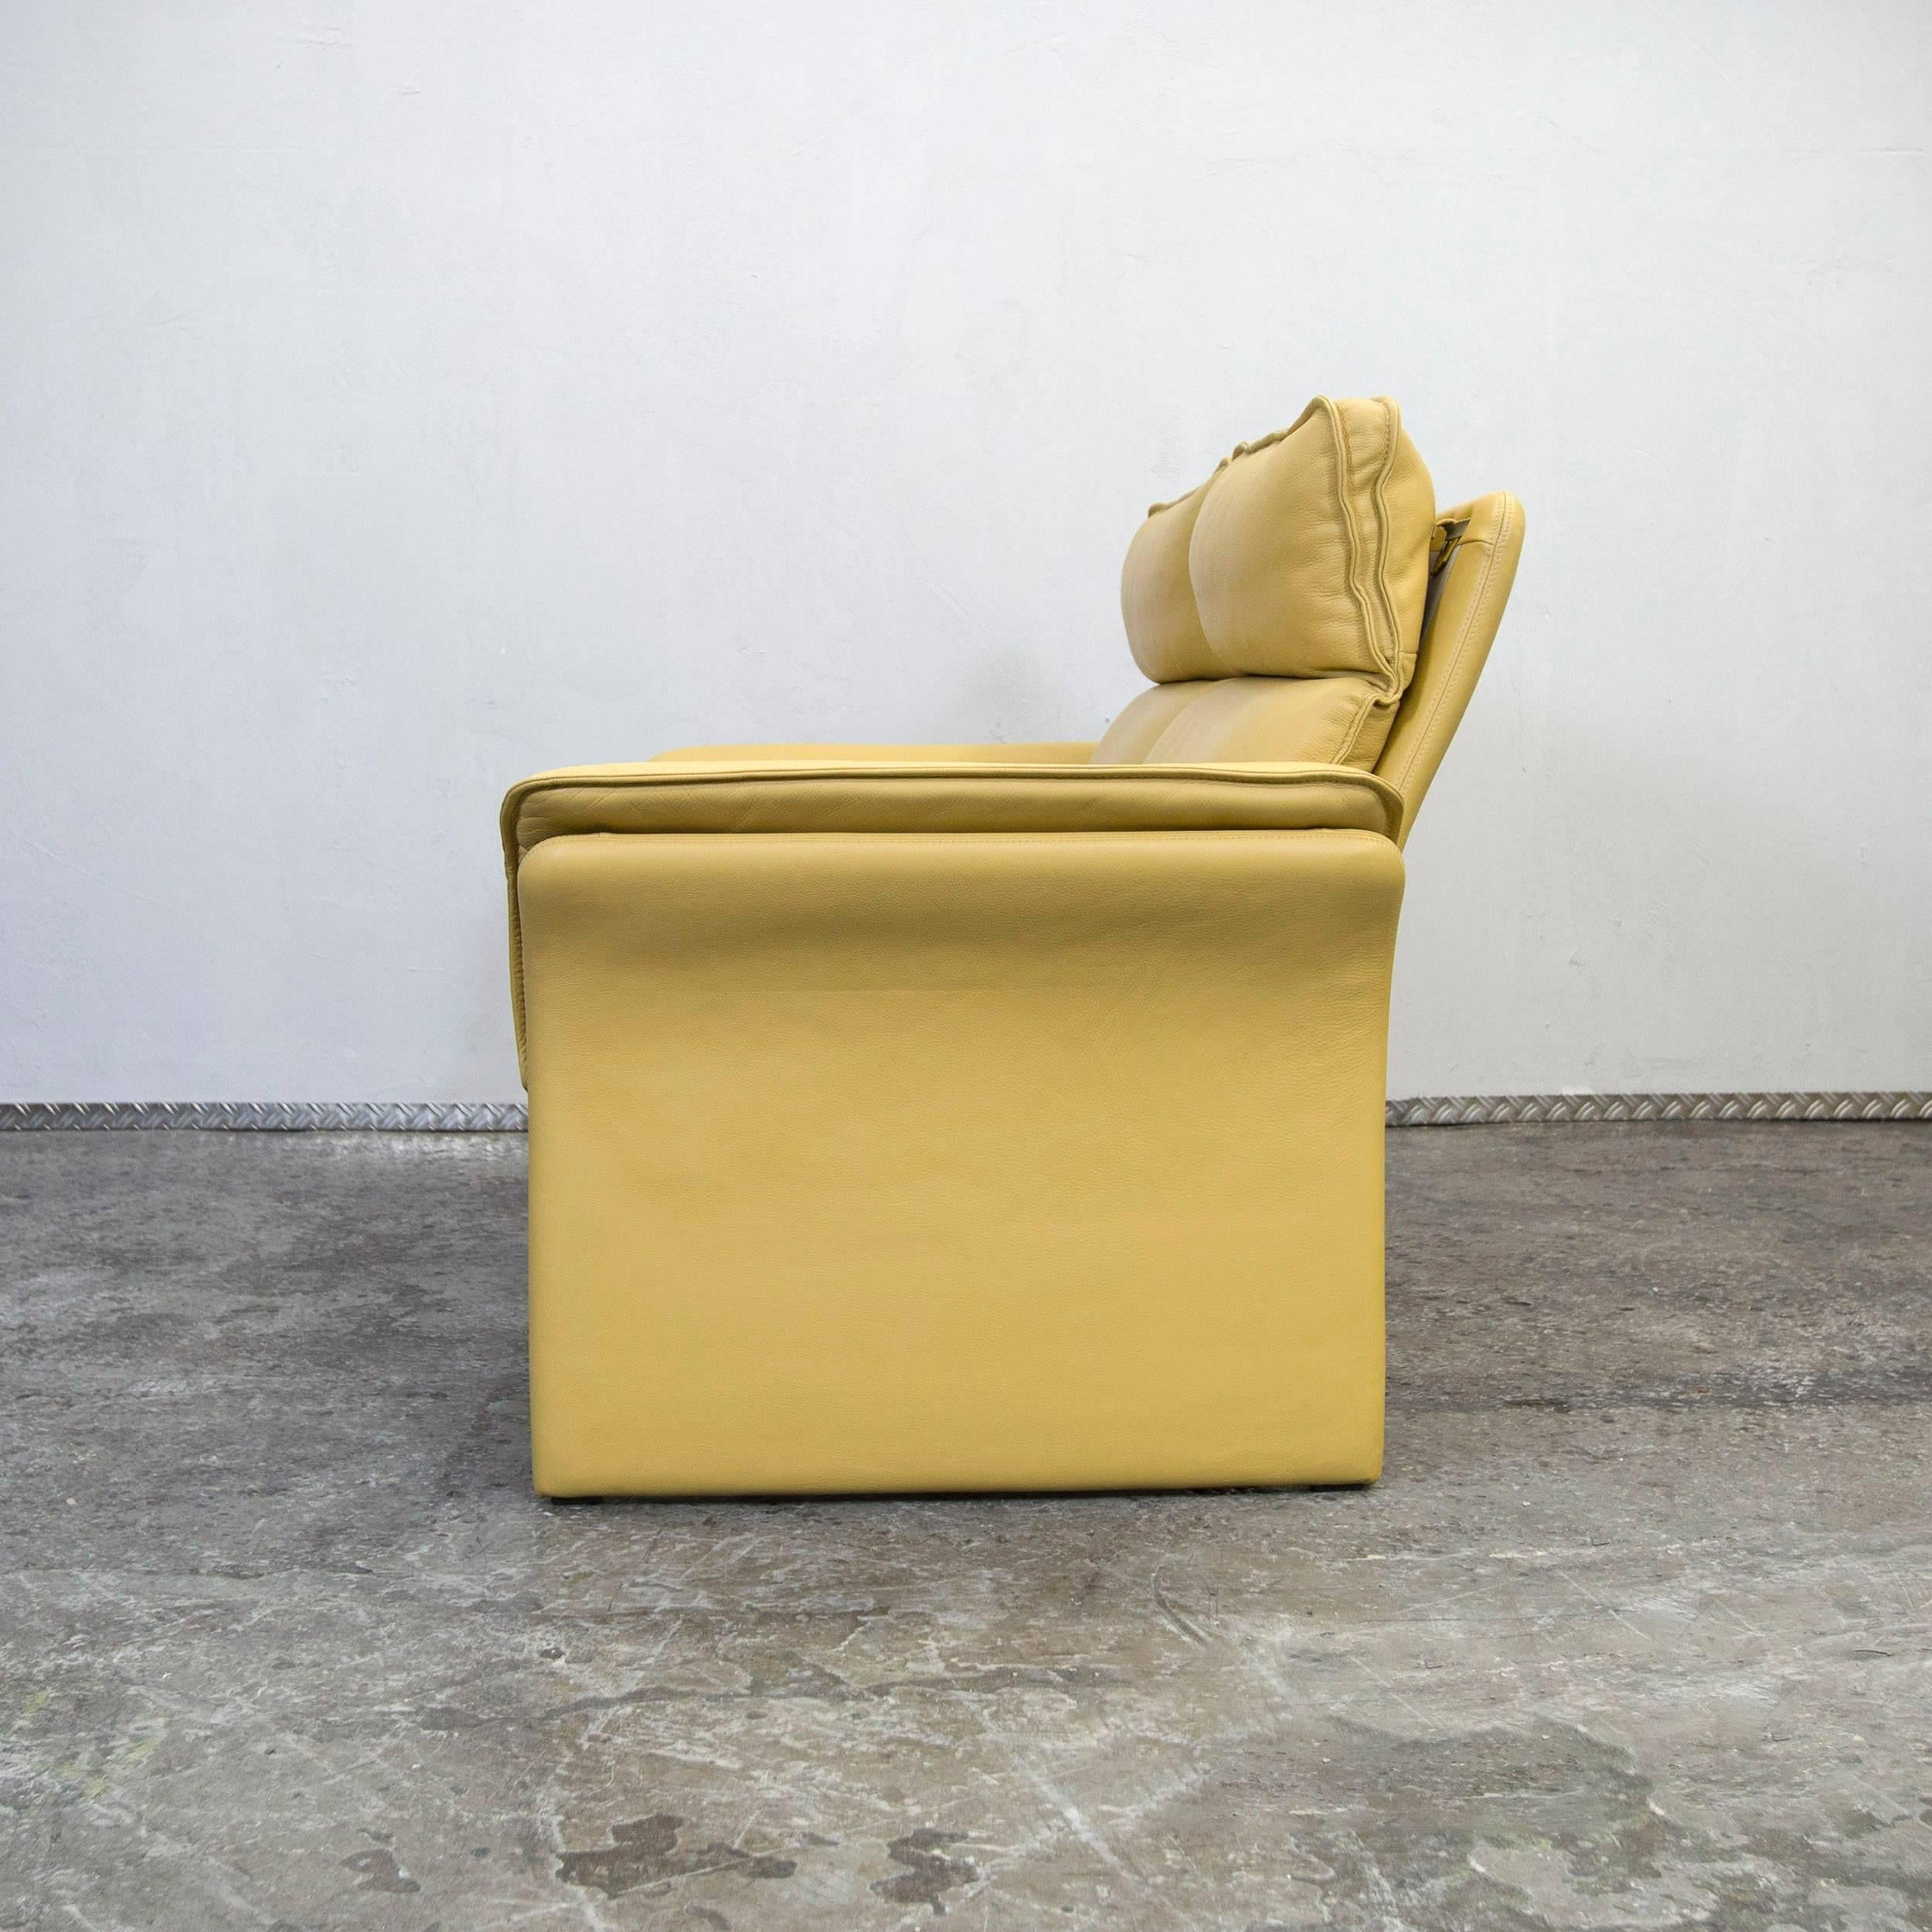 German Dreipunkt Designer Leather Sofa Mustard Yellow Two-Seat Couch Modern